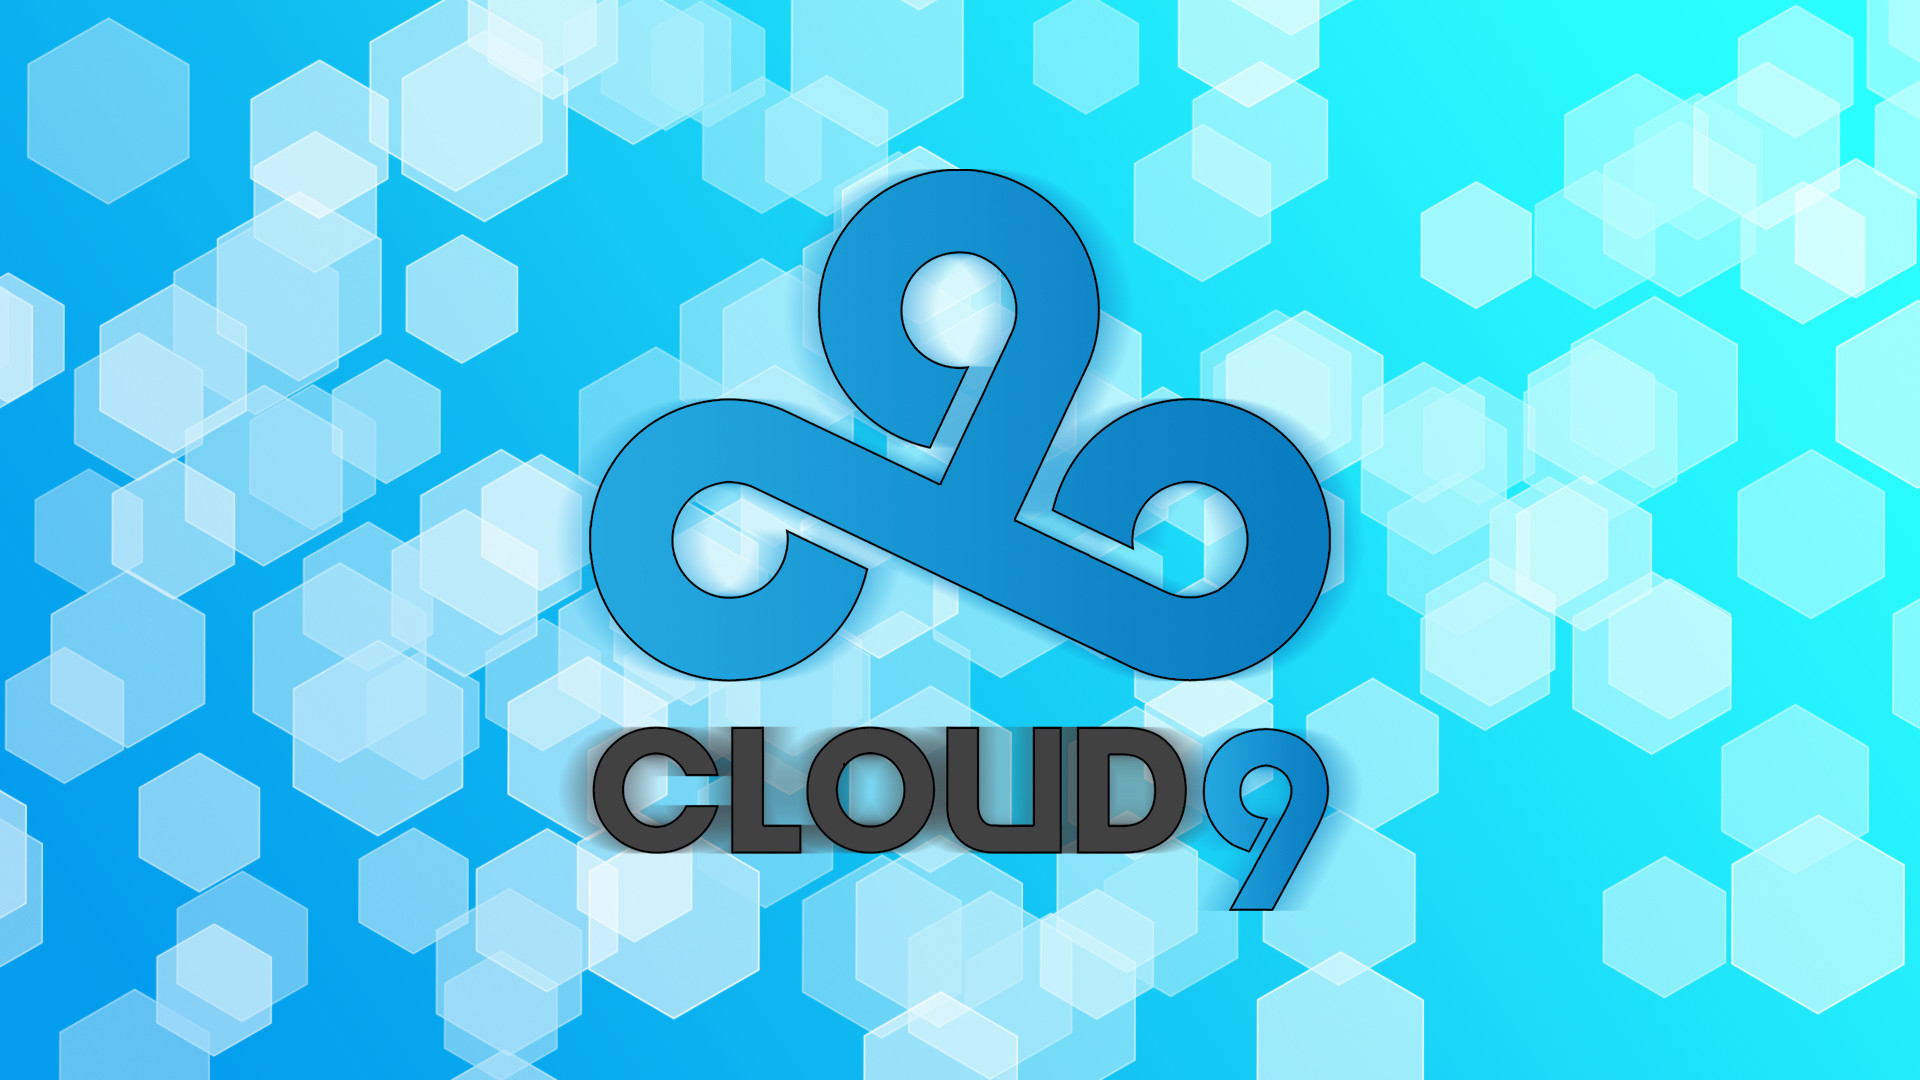 Csgo Cloud Wallpaper Image